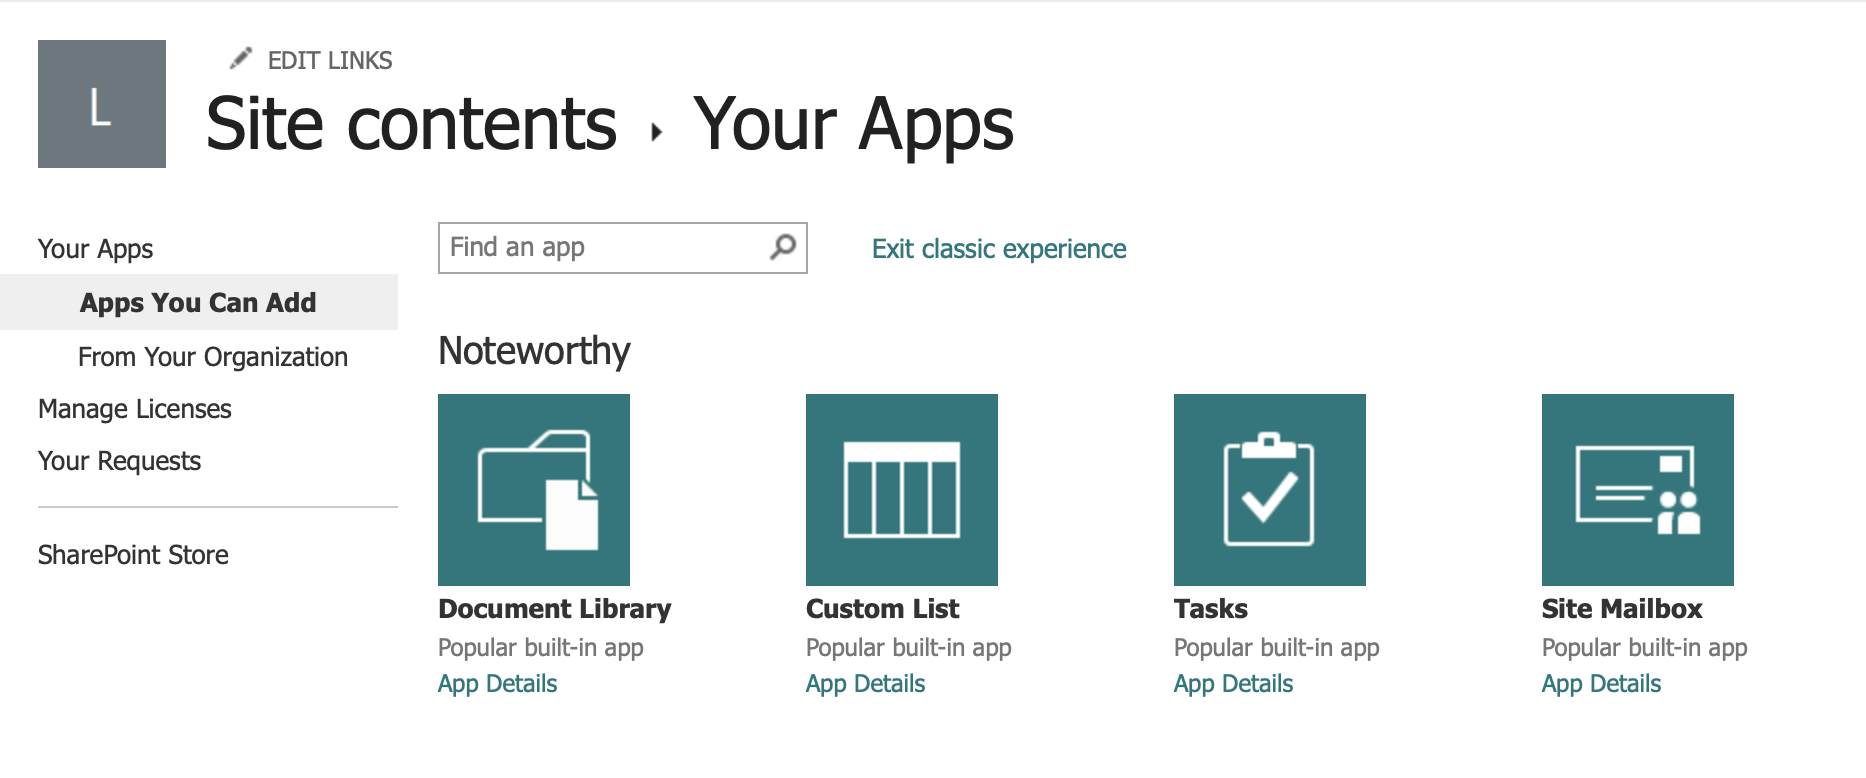 Select Tasks App